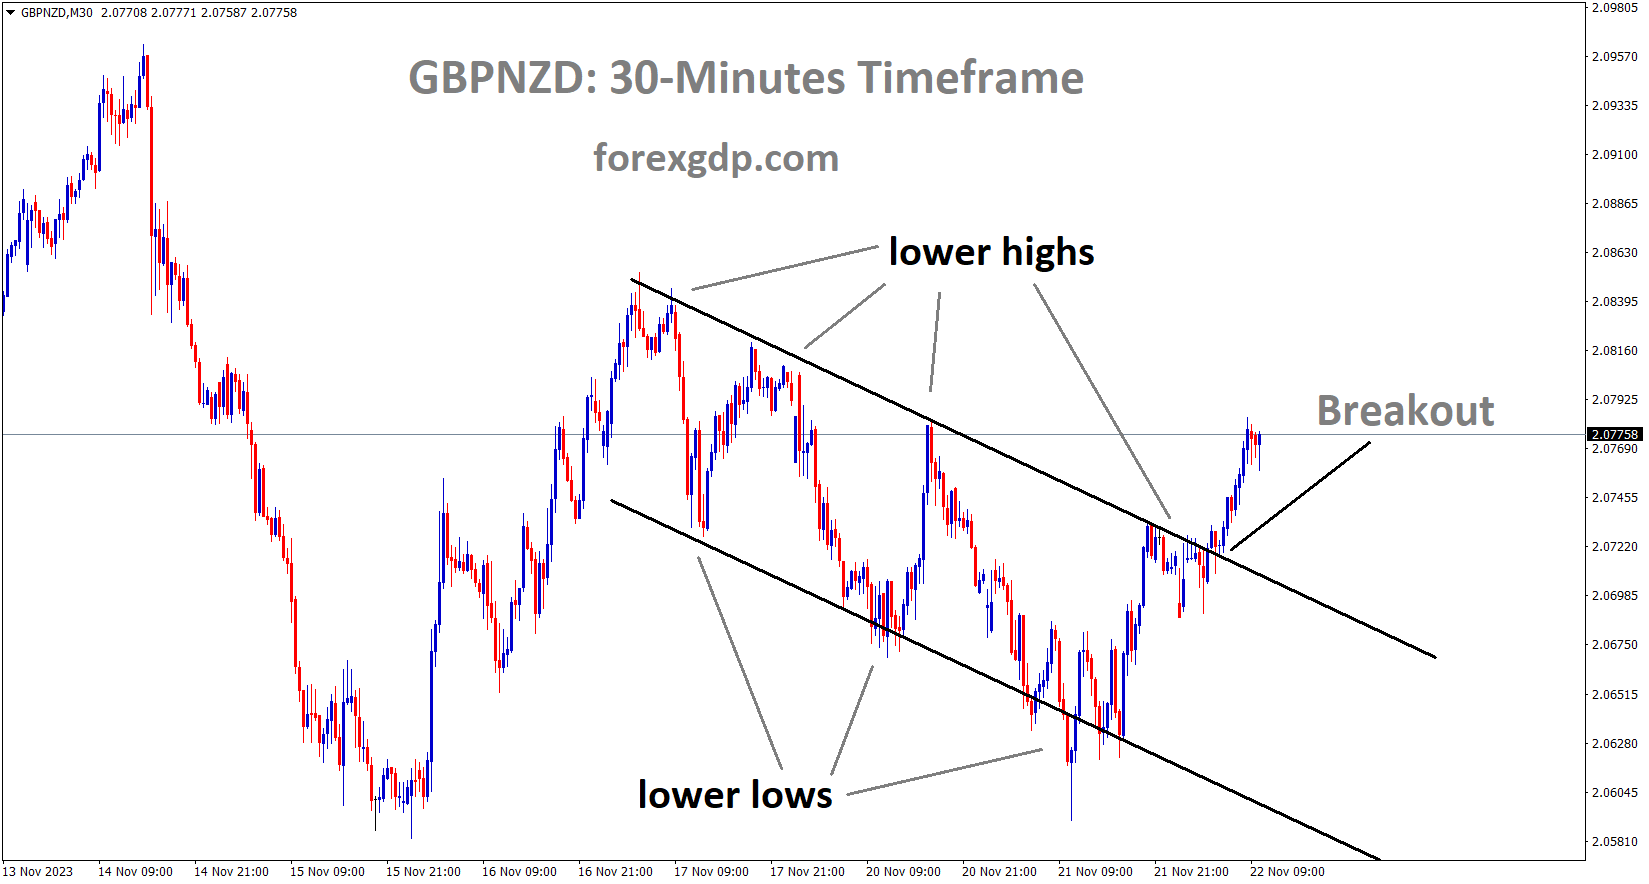 GBPNZD has broken the Descending channel in upside